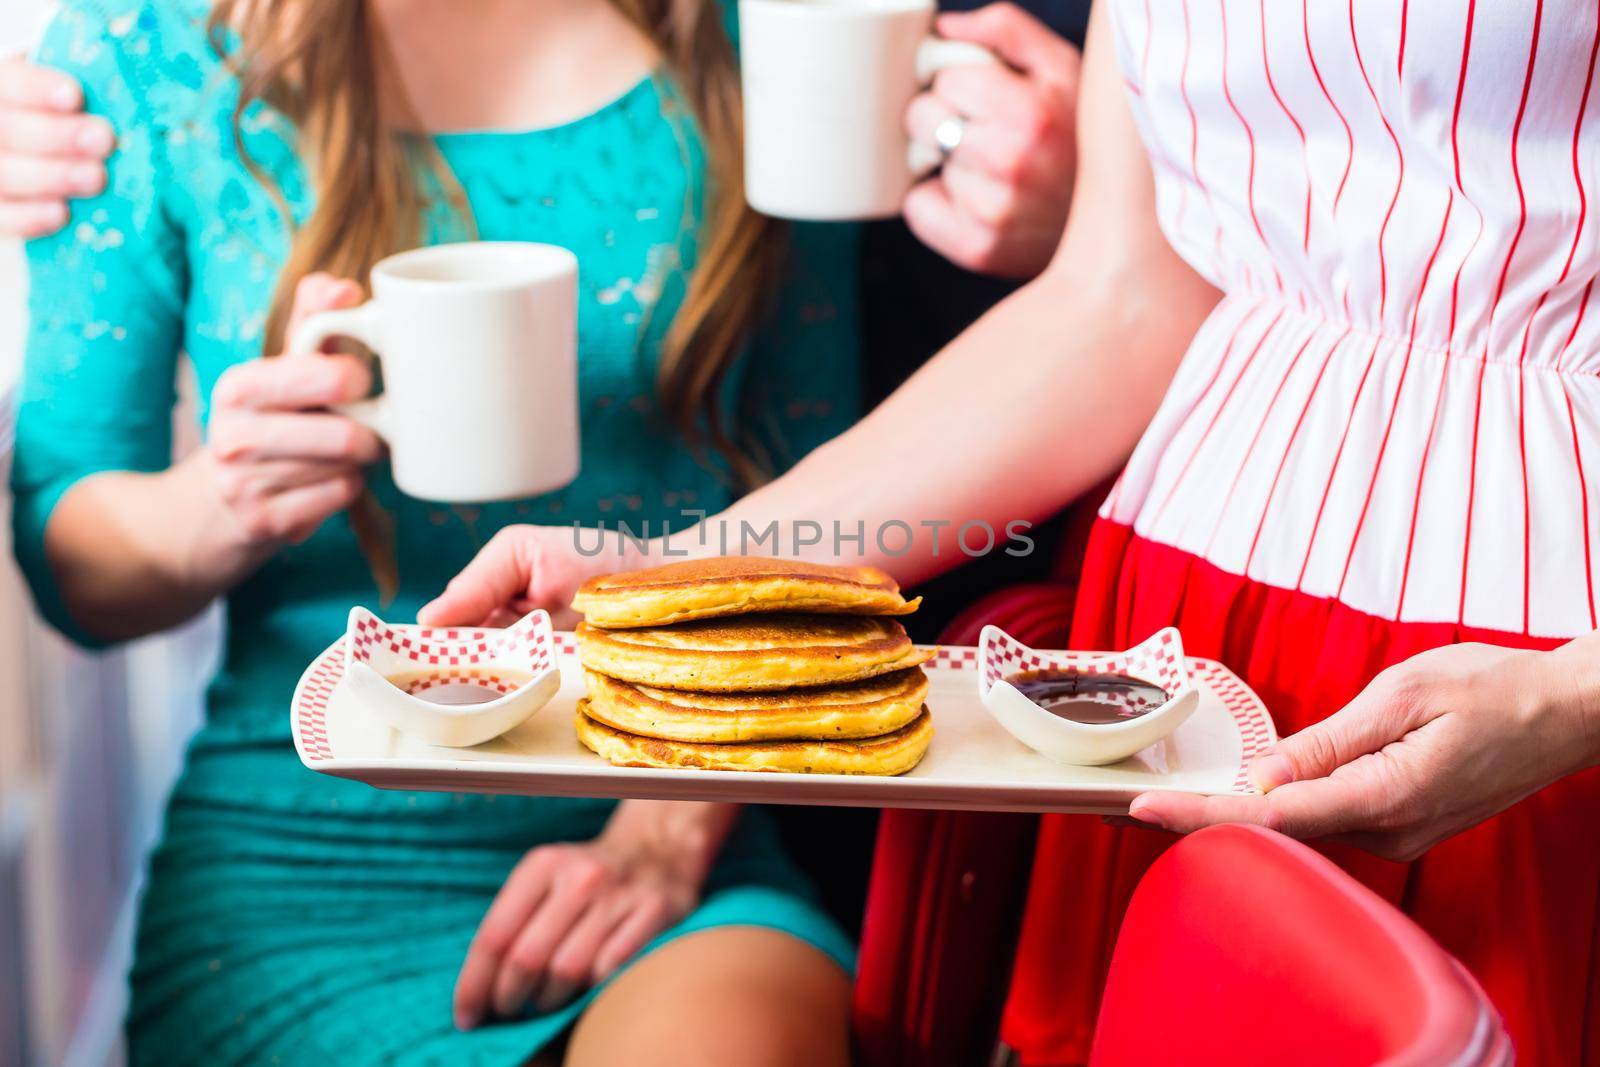 People in diner or restaurant having pancakes by Kzenon